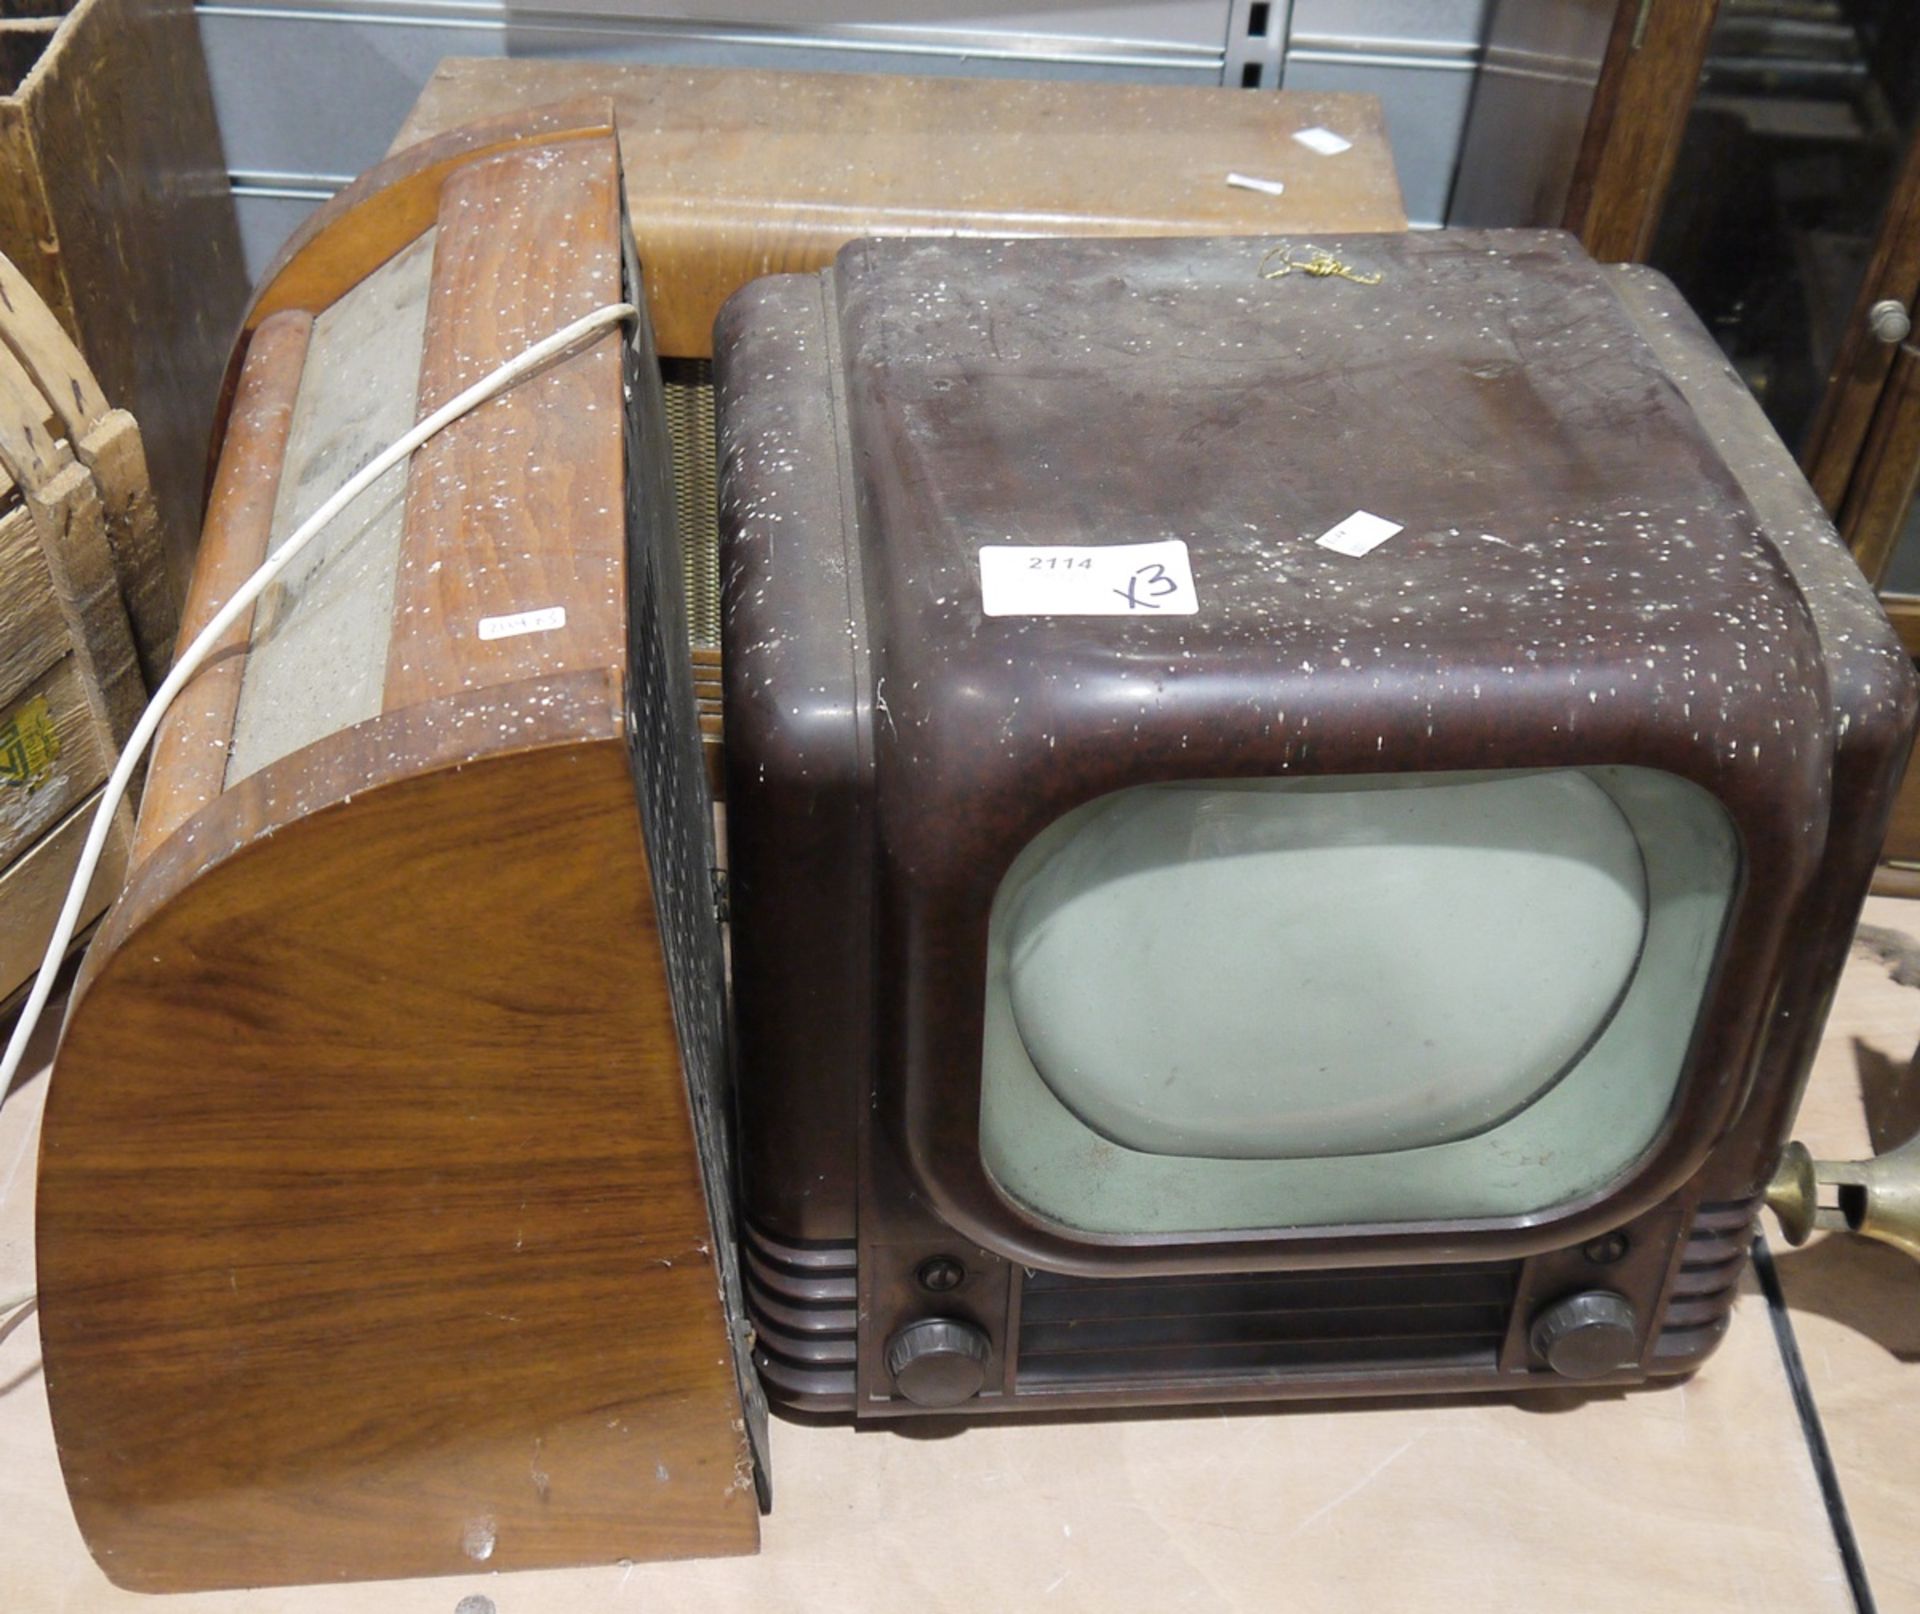 Bakelite vintage television labelled Bush, 37cm high x 39cm wide, a wood-cased vintage GEC radio and